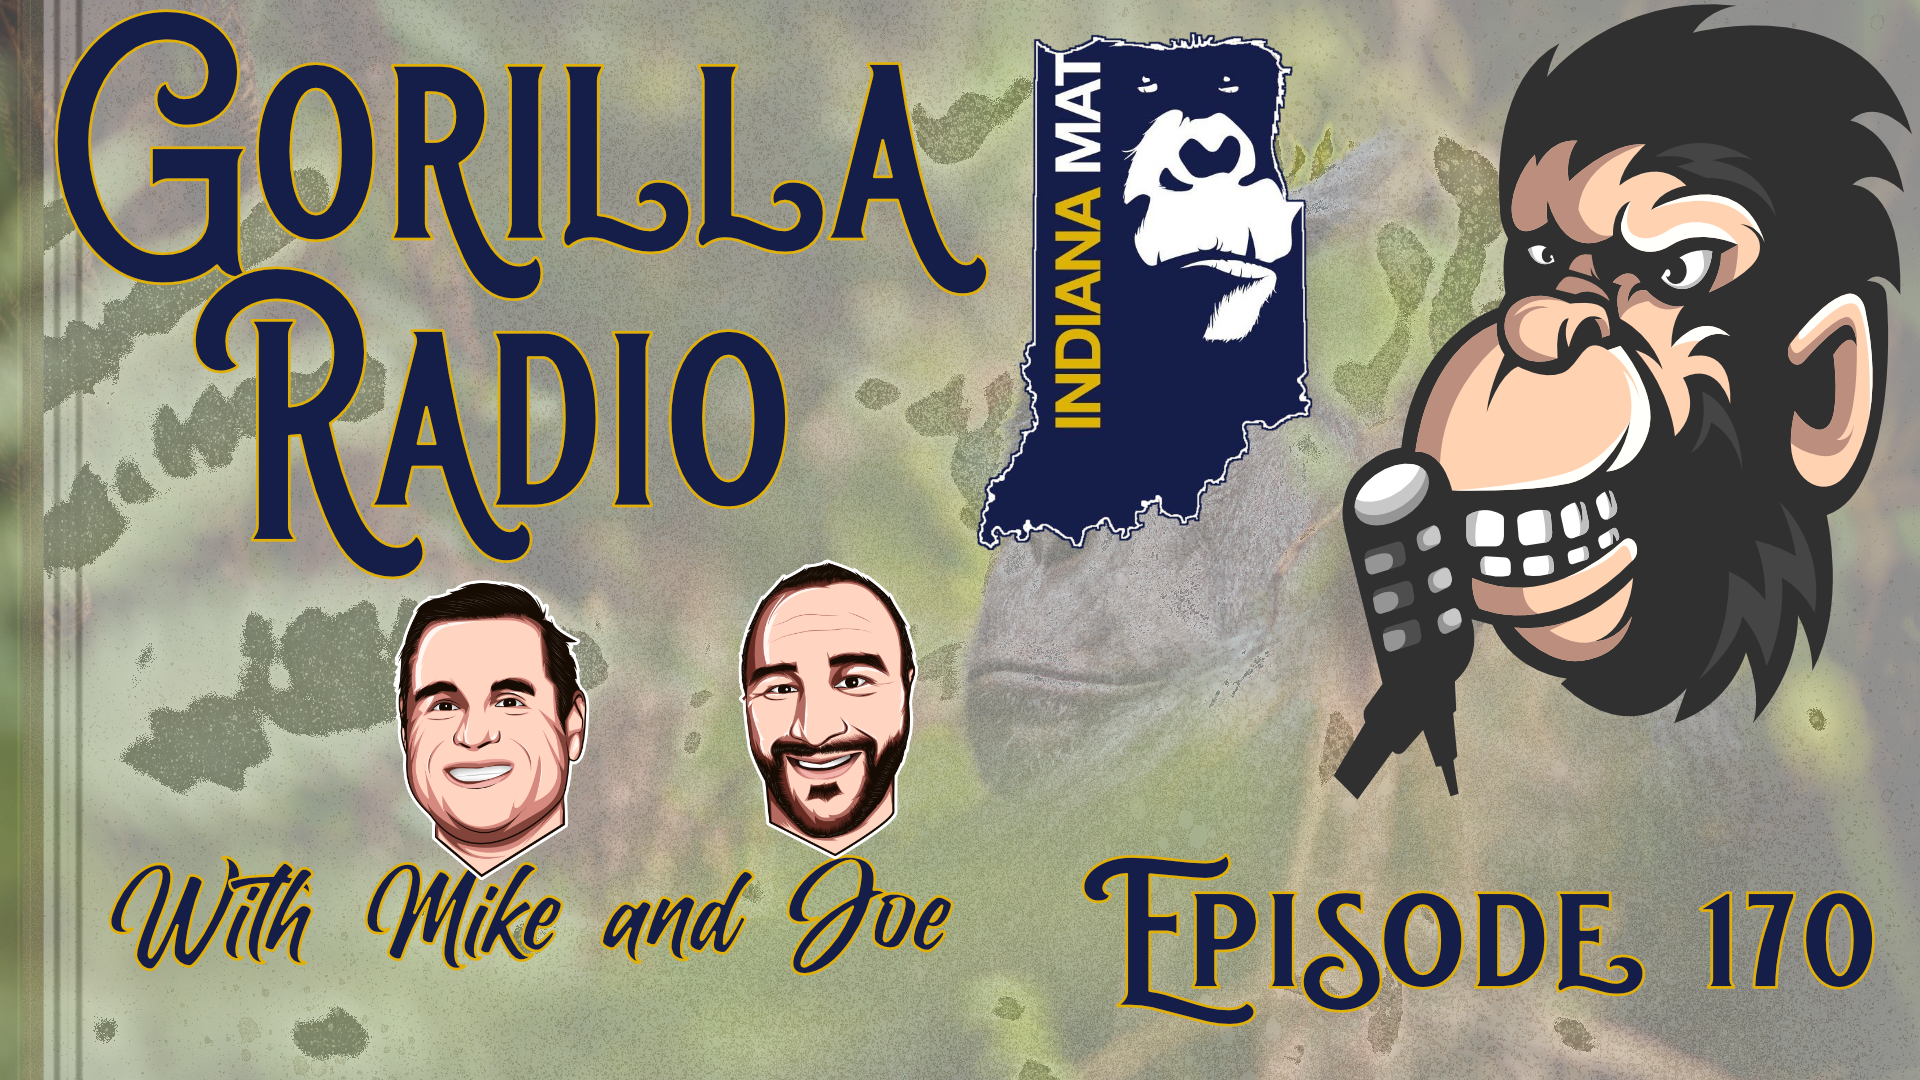 More information about "IndianaMat Gorilla Radio Episode 170"